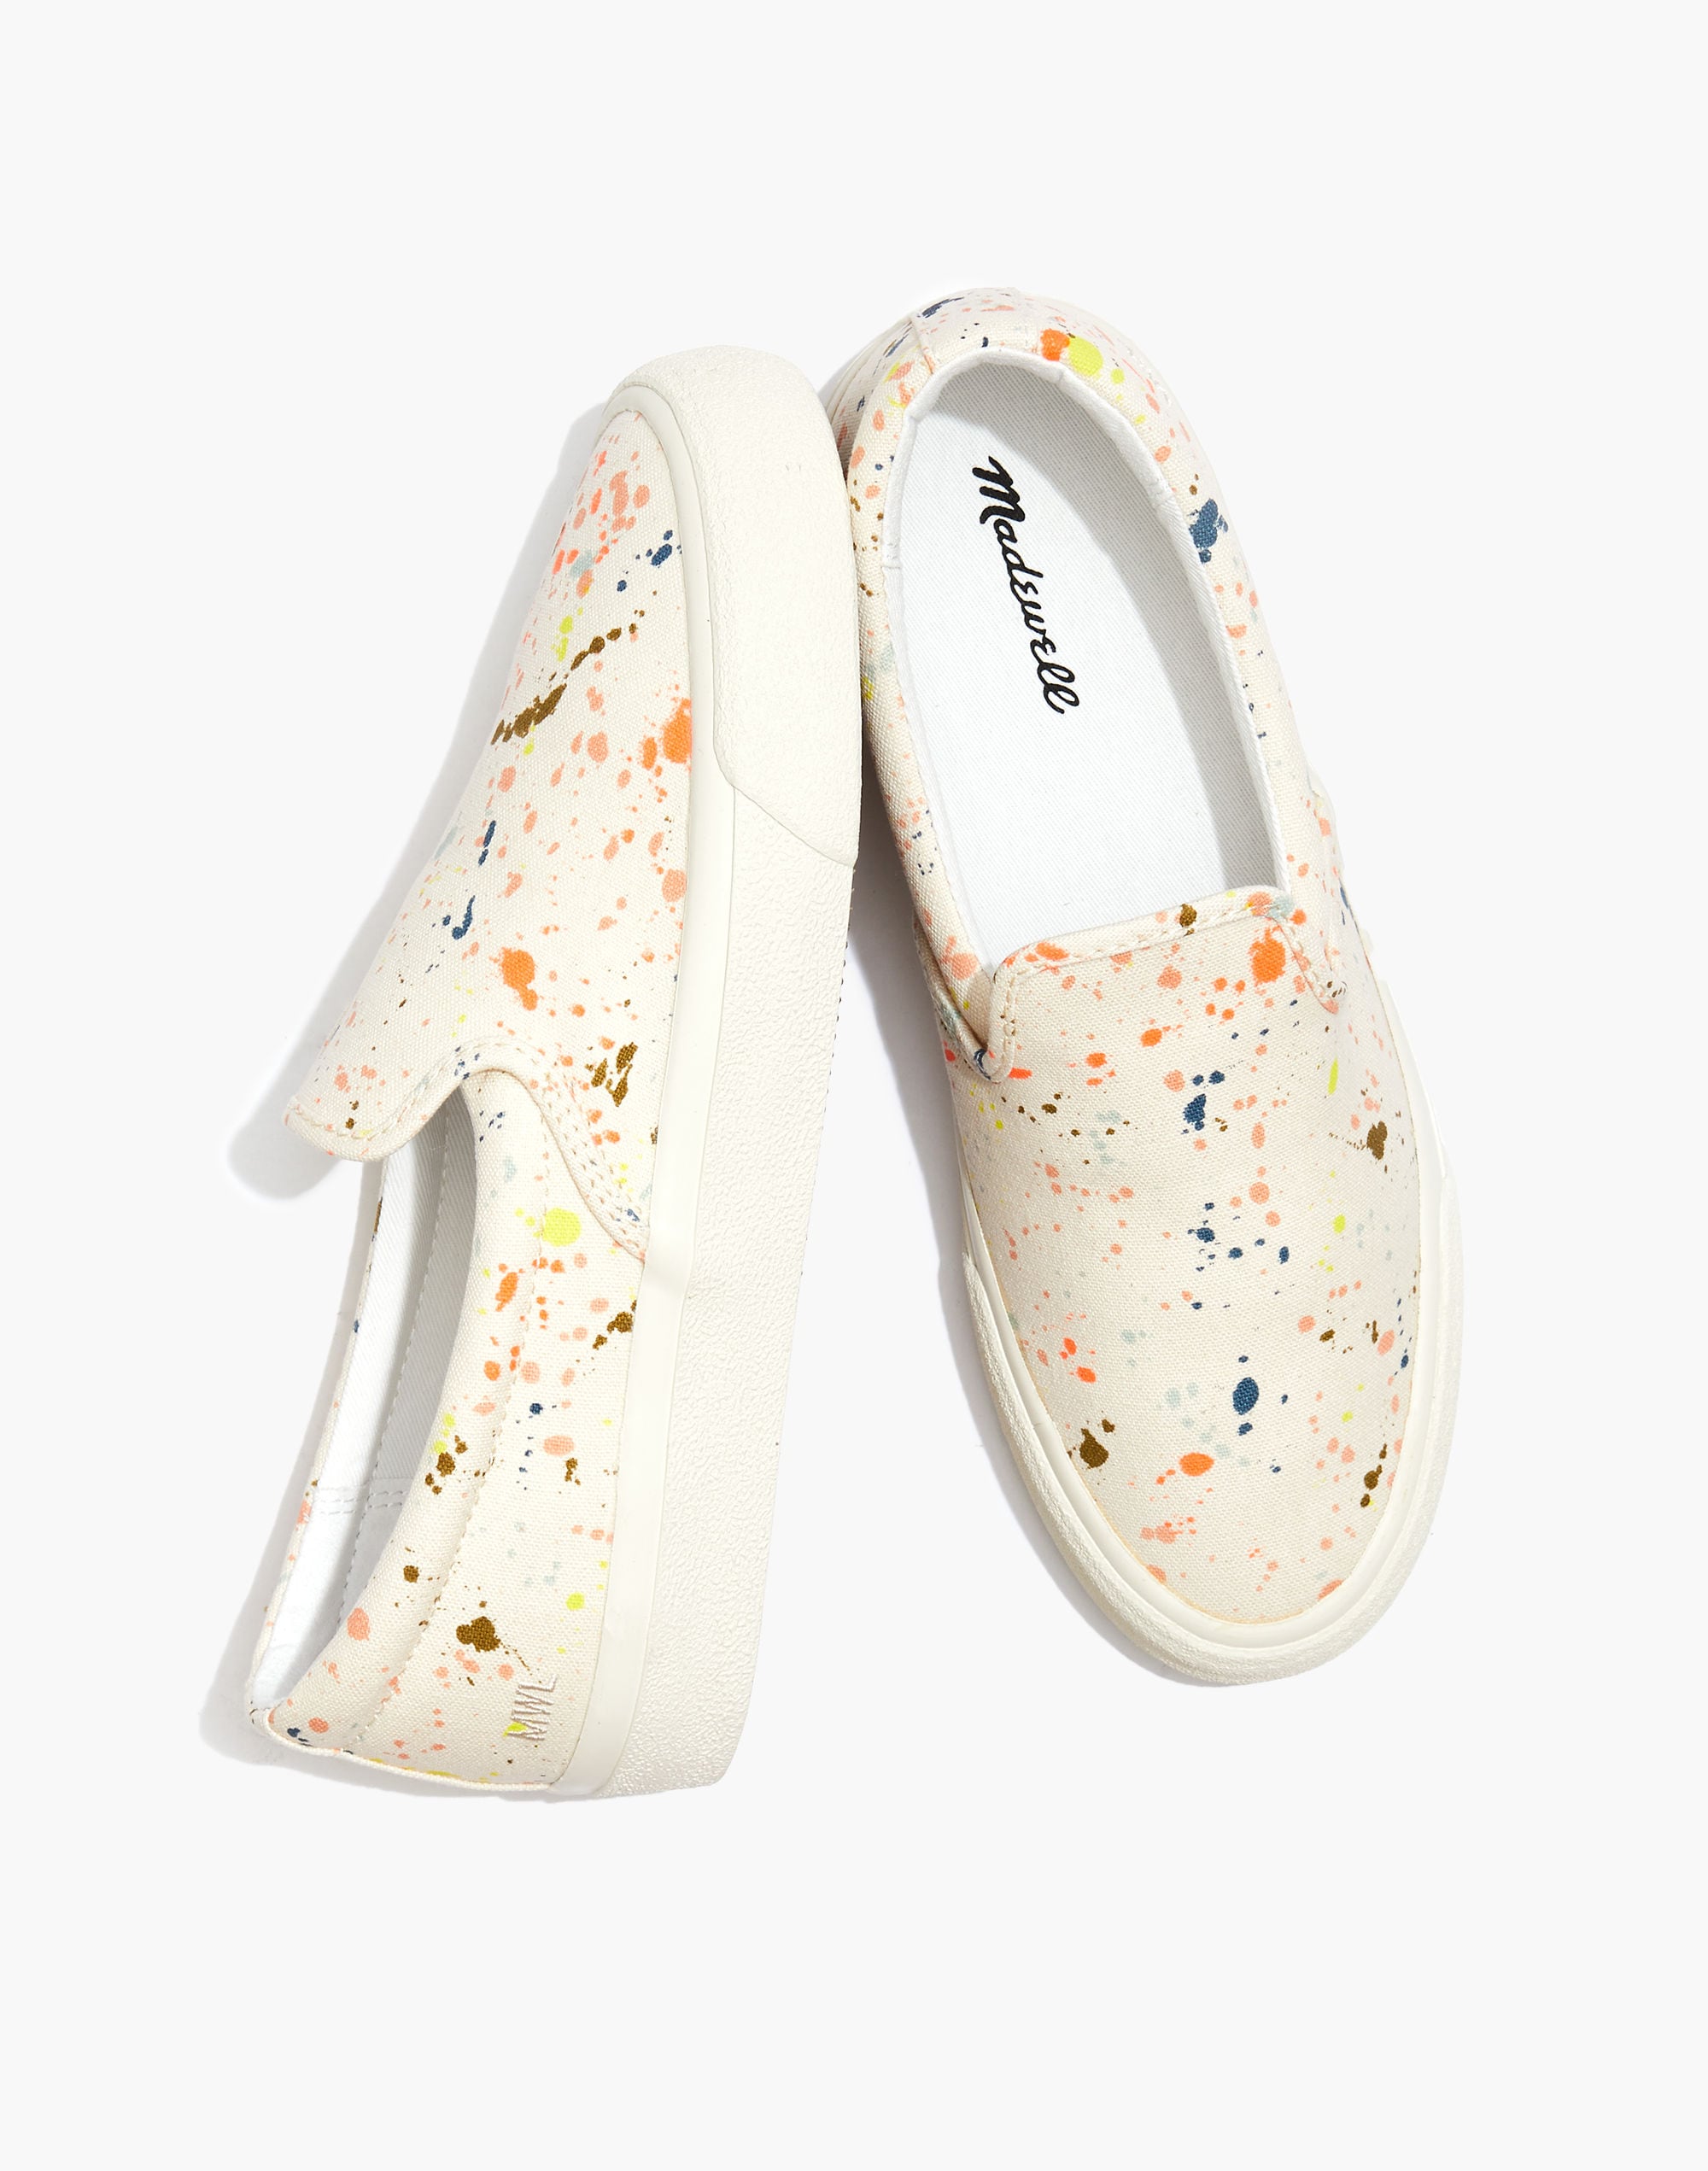 Splatter Paint Shoesblack Canvas With White Splatter Paint Spring and  Summer Shoes White Paint Splatter 